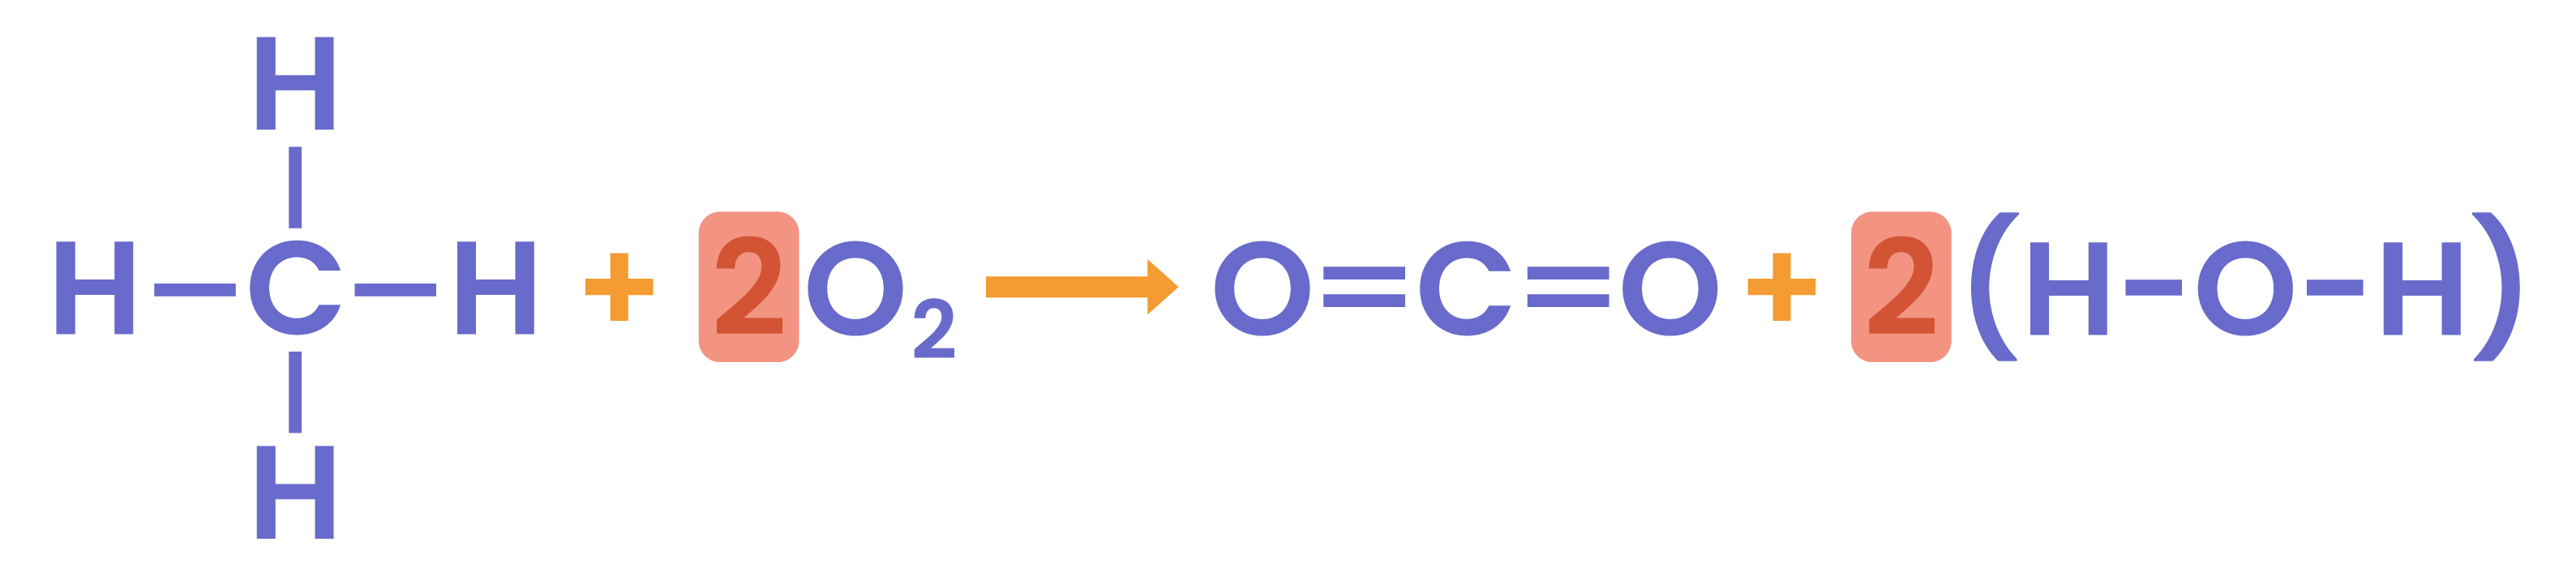 edexcel_igcse_chemistry_topic 18_energetics_008_combustion reaction